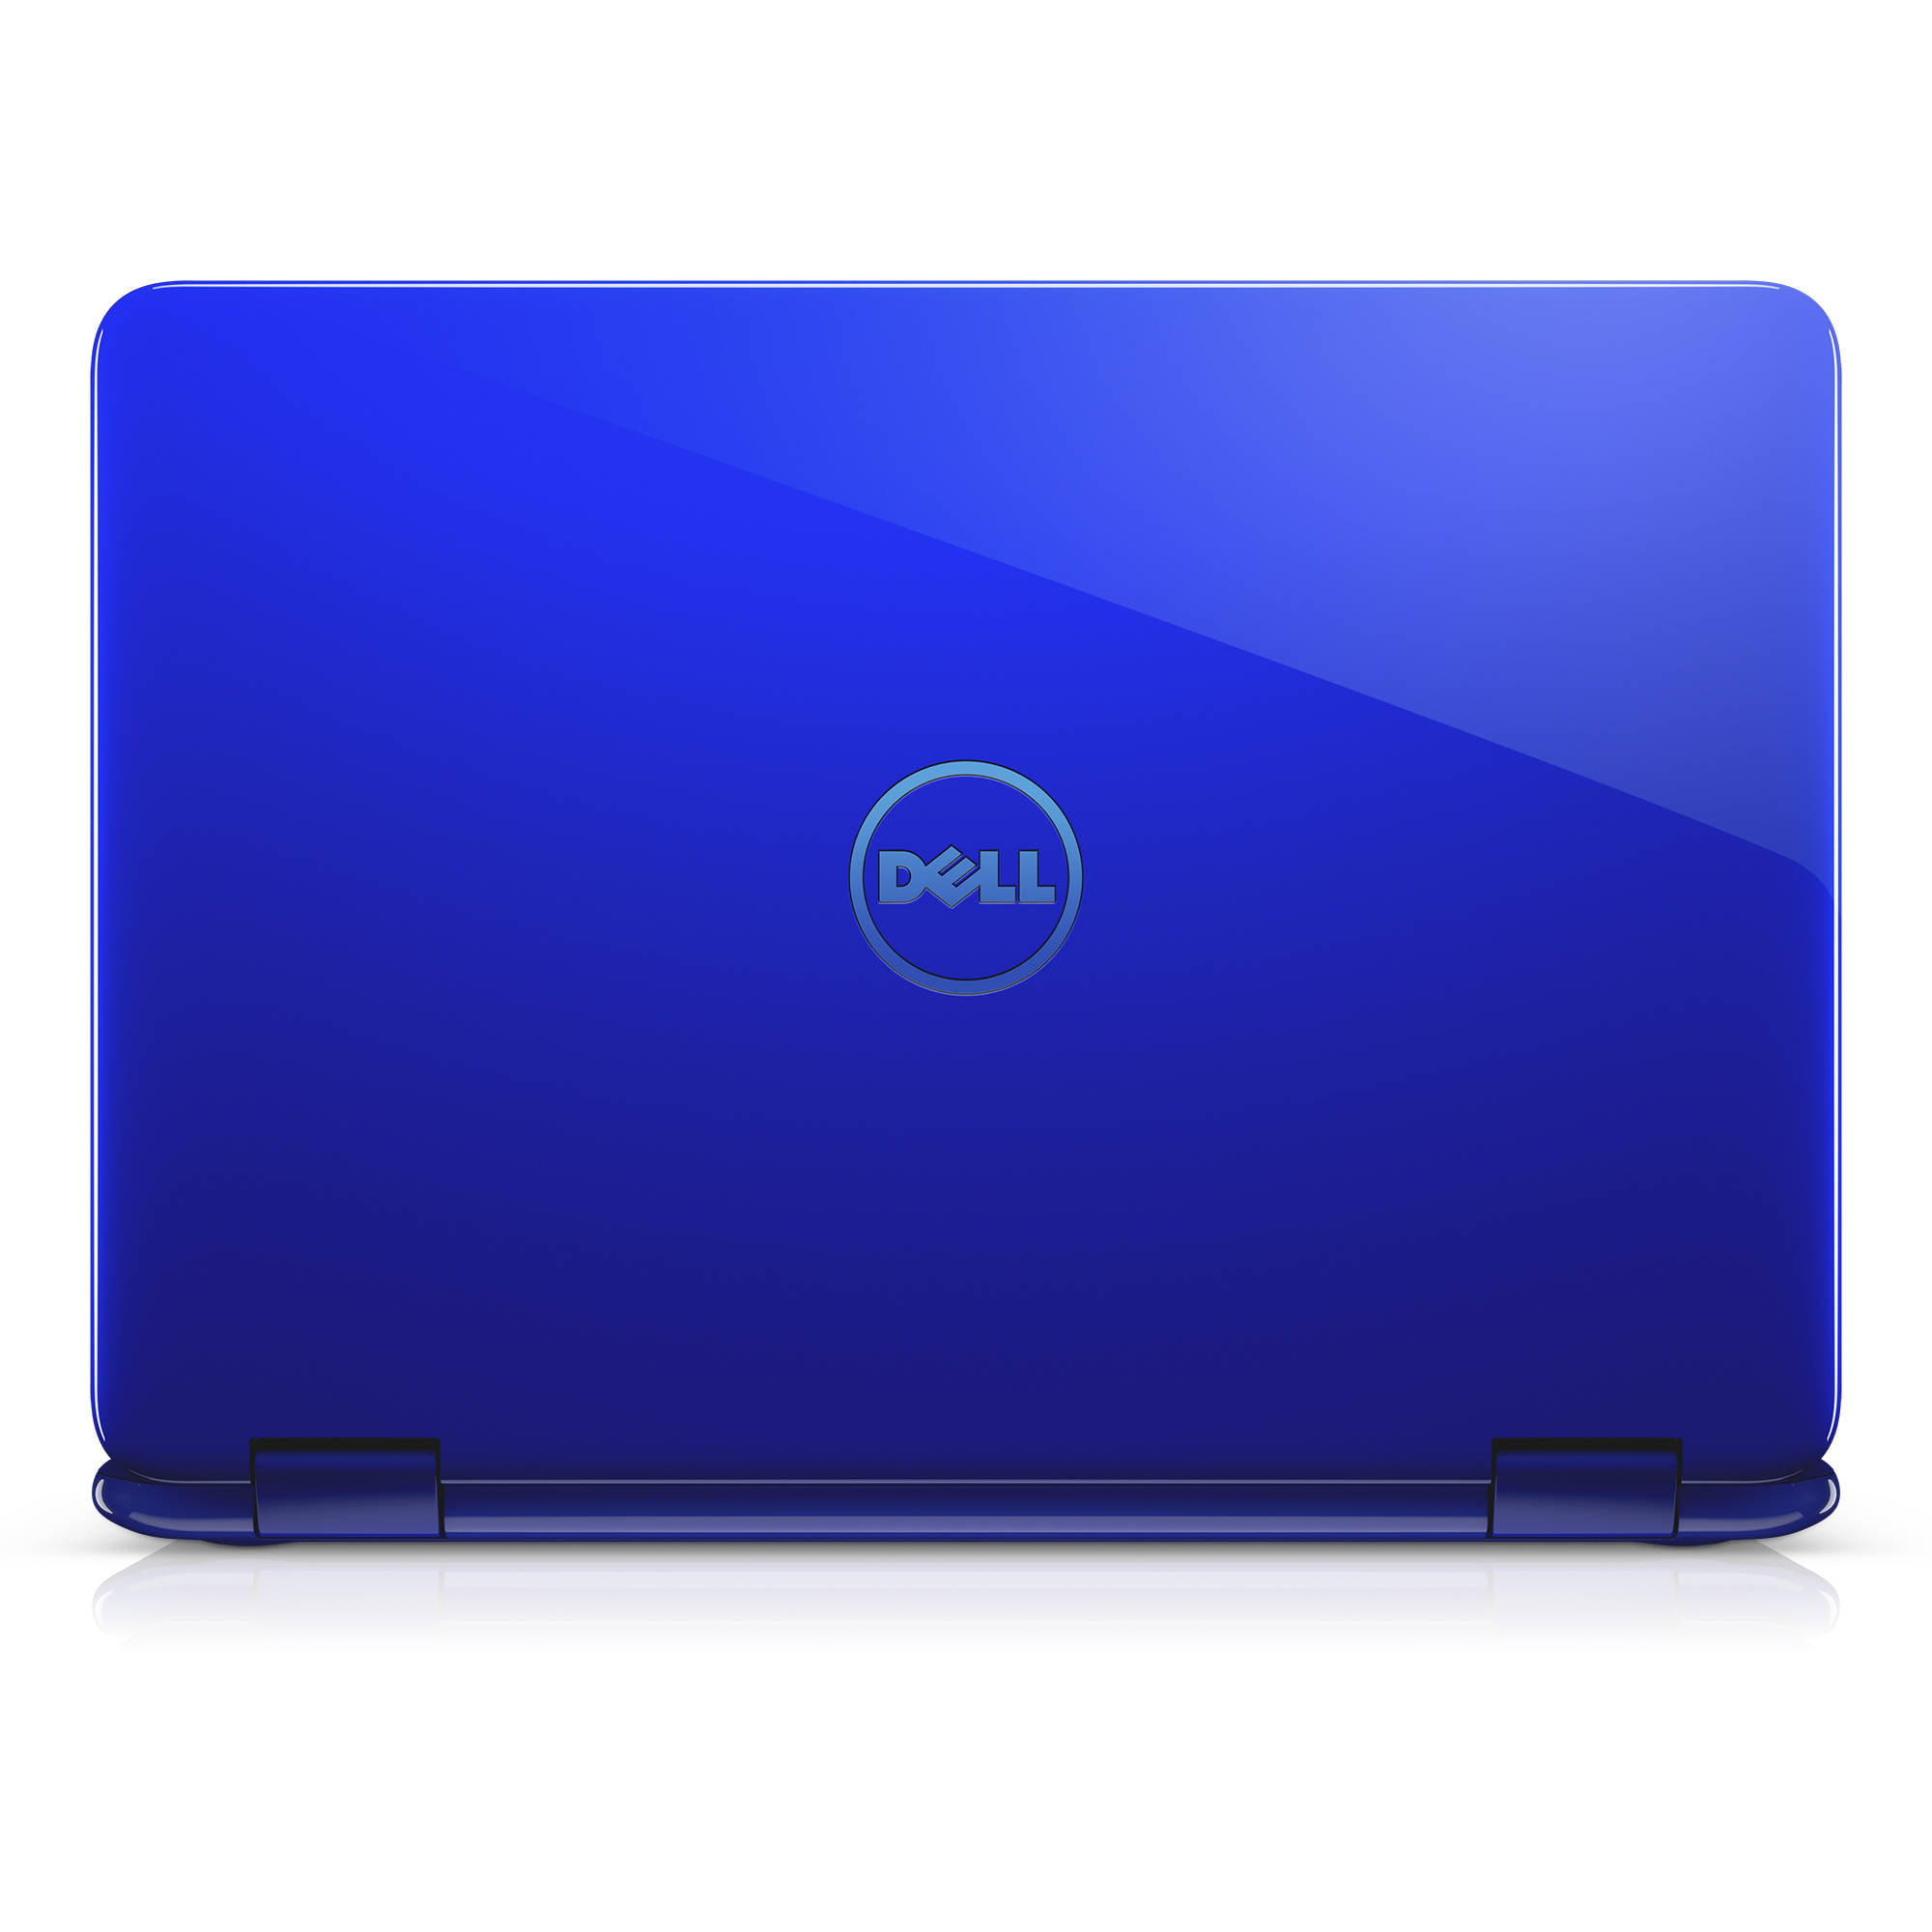 Dell I3168 0028blu Inspiron 11 3000 11 6 Laptop Touch Screen 2 In 1 Windows 10 Home Intel Celeron N3060 Processor 2gb Ram 32gb Emmc Walmart Com Walmart Com